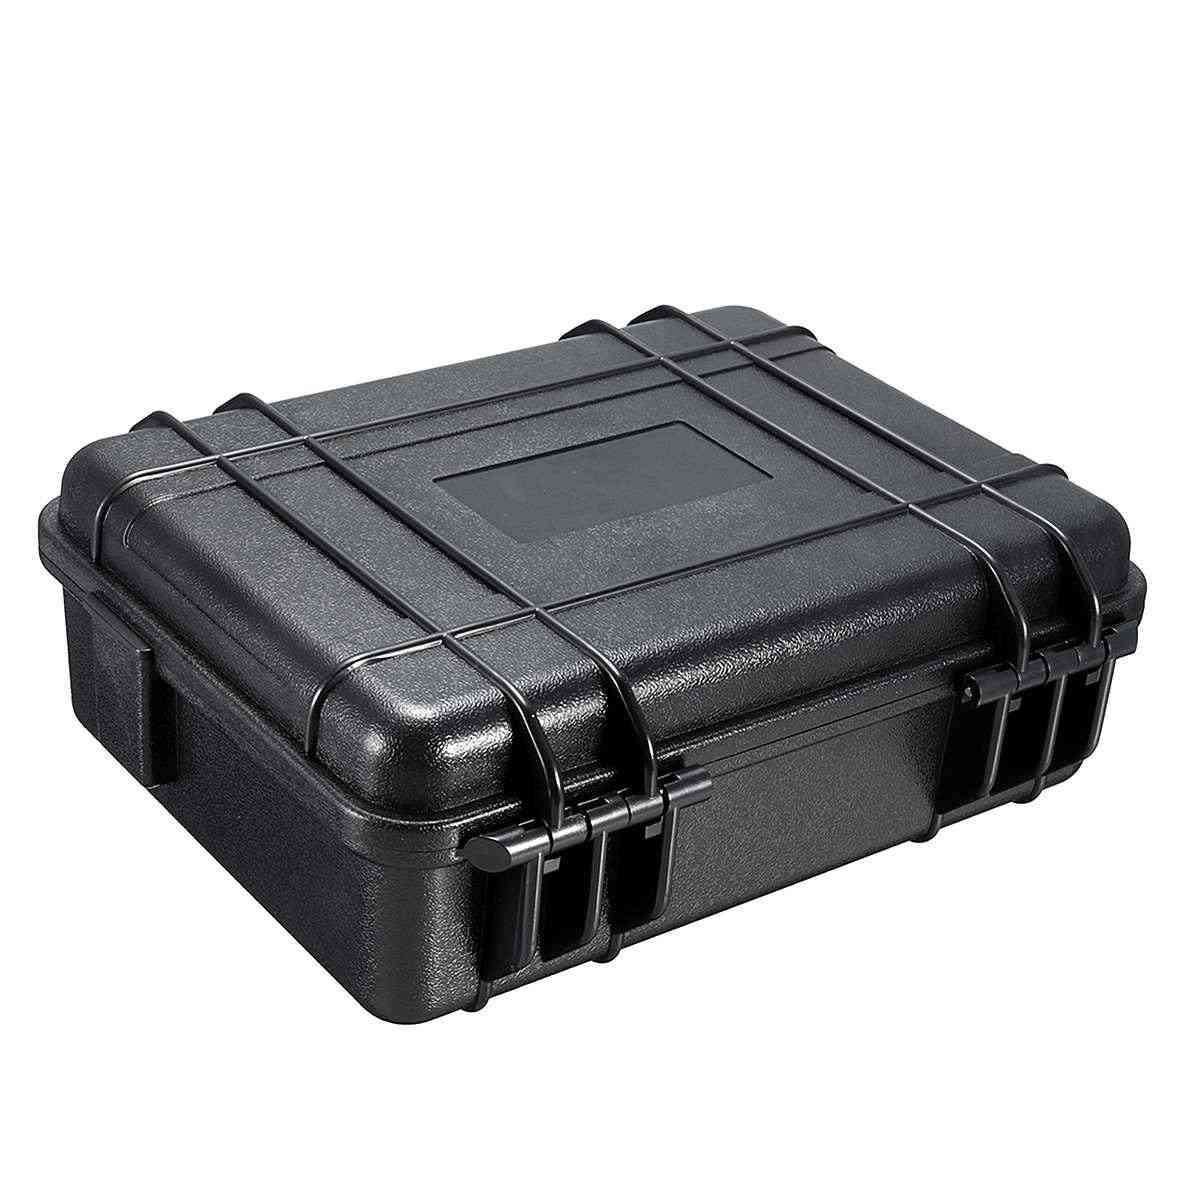 Waterproof Hard Carry Case / Bag Tool Kits With Sponge